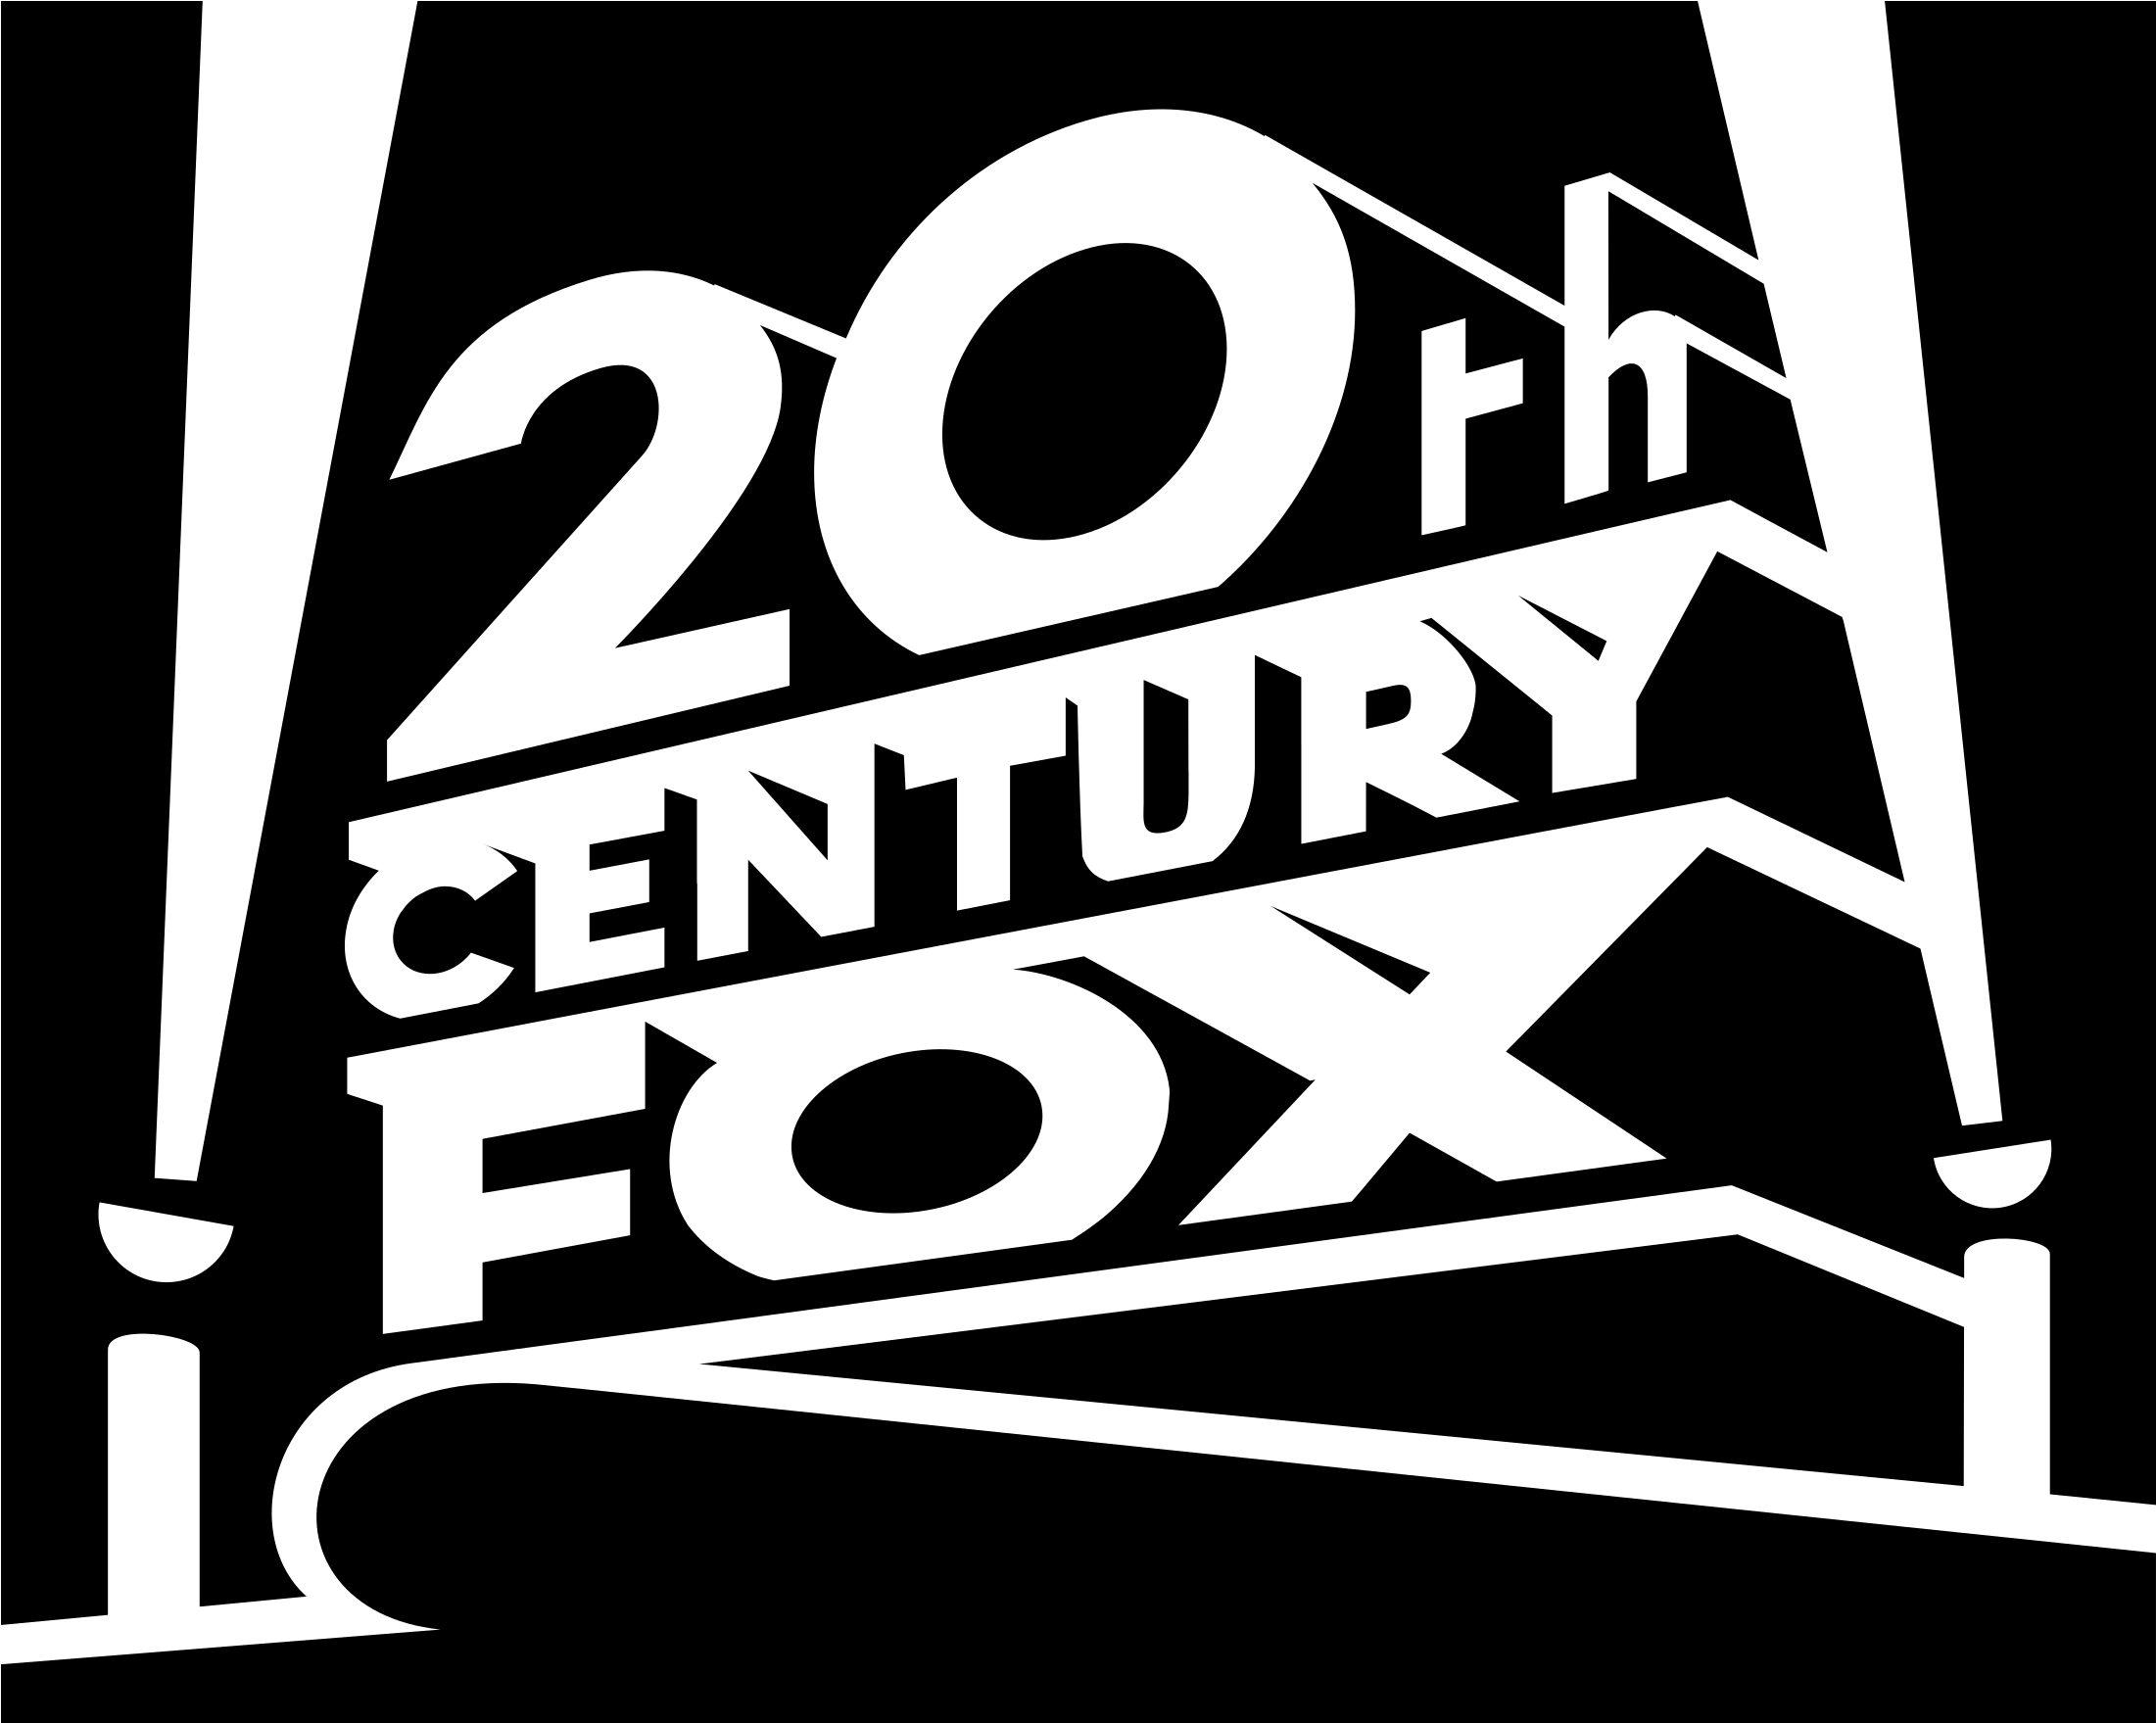 20th Century Fox Logo Download PNG Image